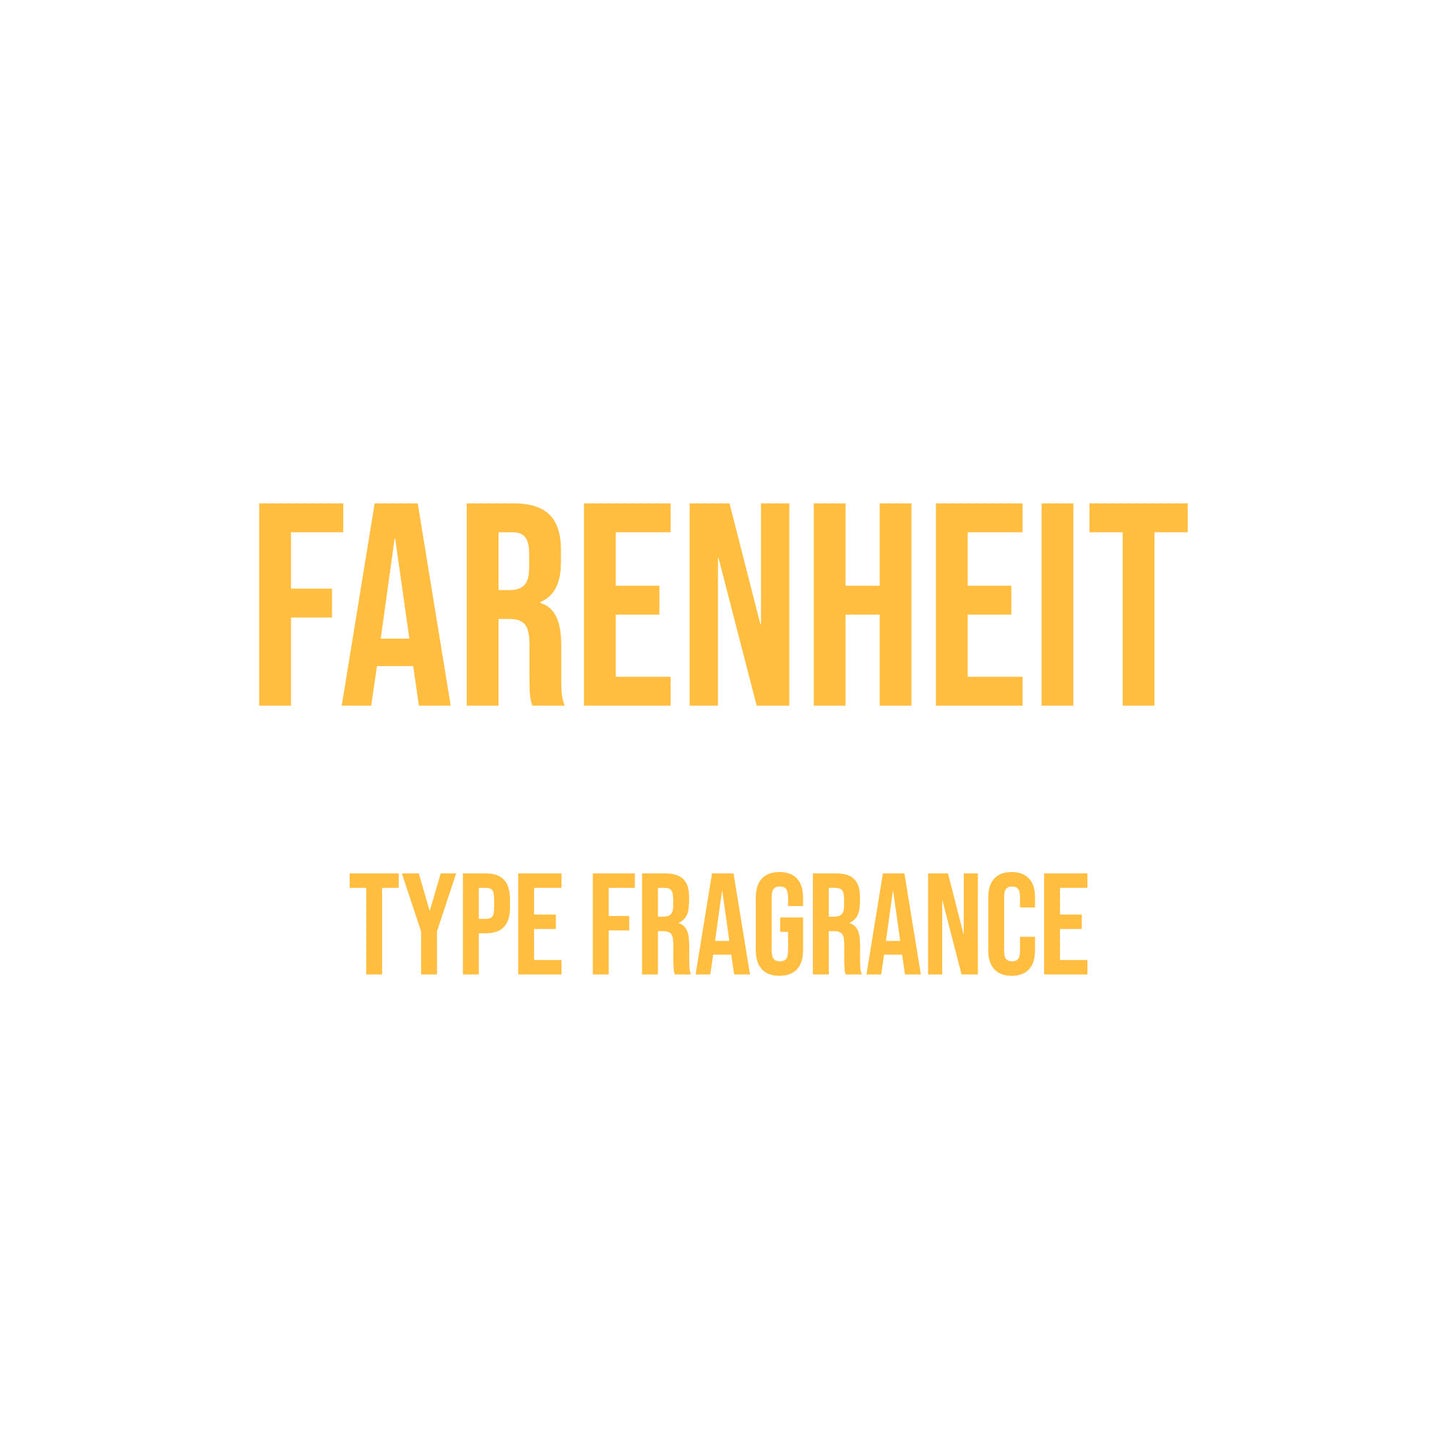 Fahrenheit Type Fragrance